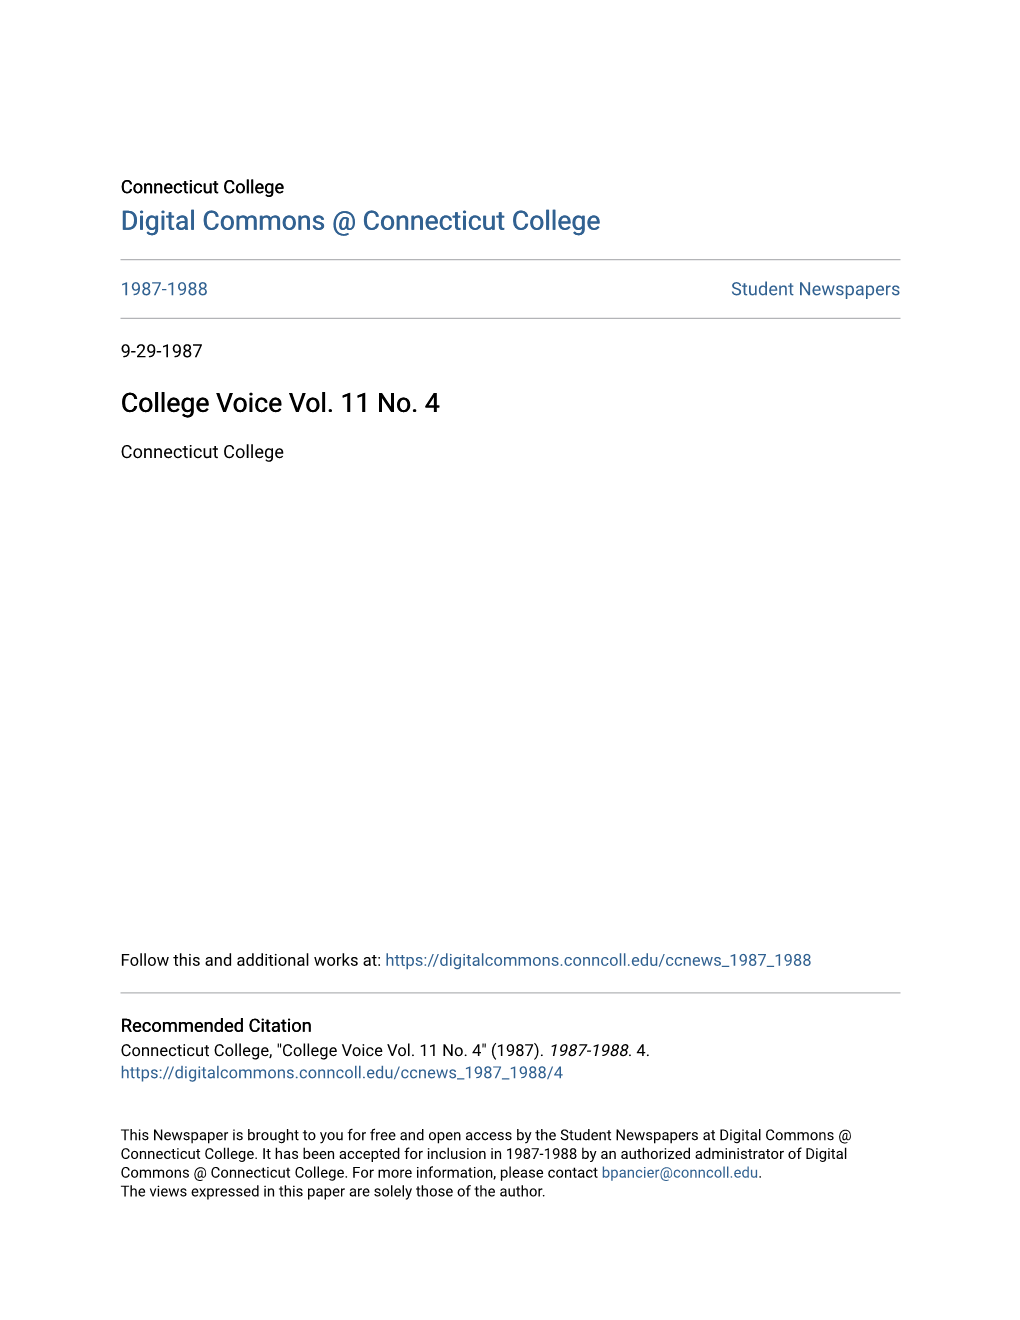 College Voice Vol. 11 No. 4